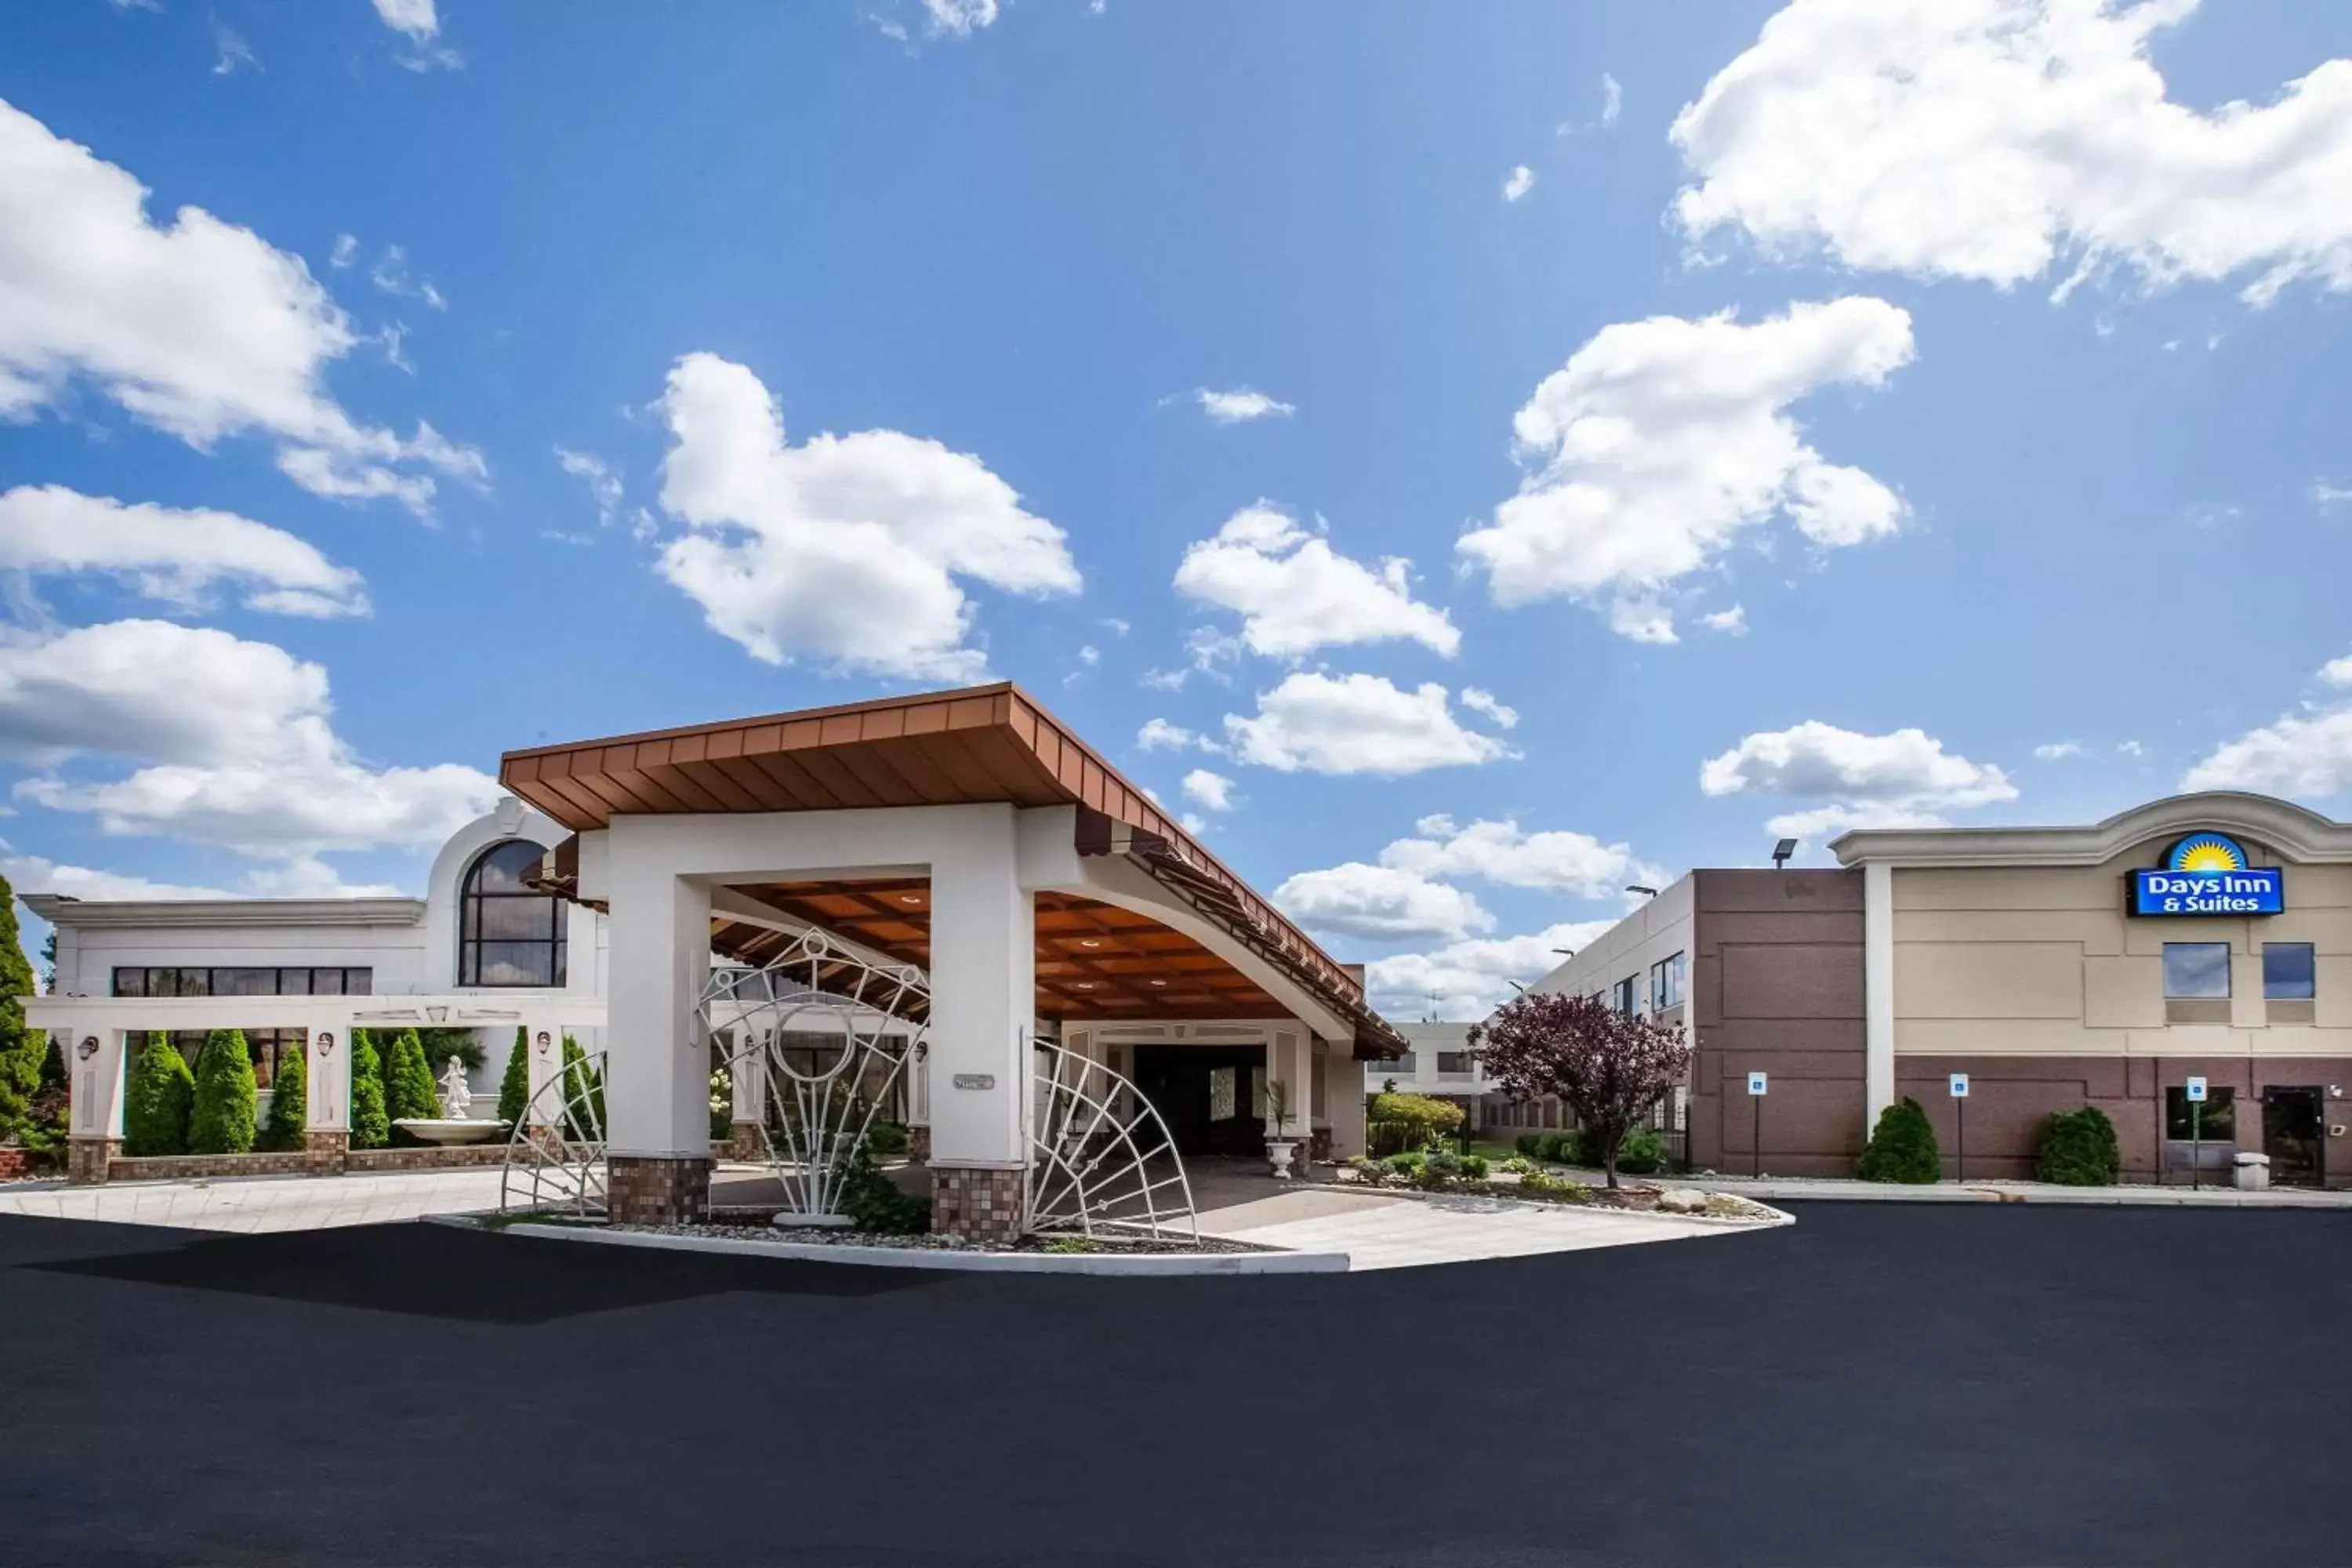 Property Building in Days Inn & Suites by Wyndham Rochester Hills MI